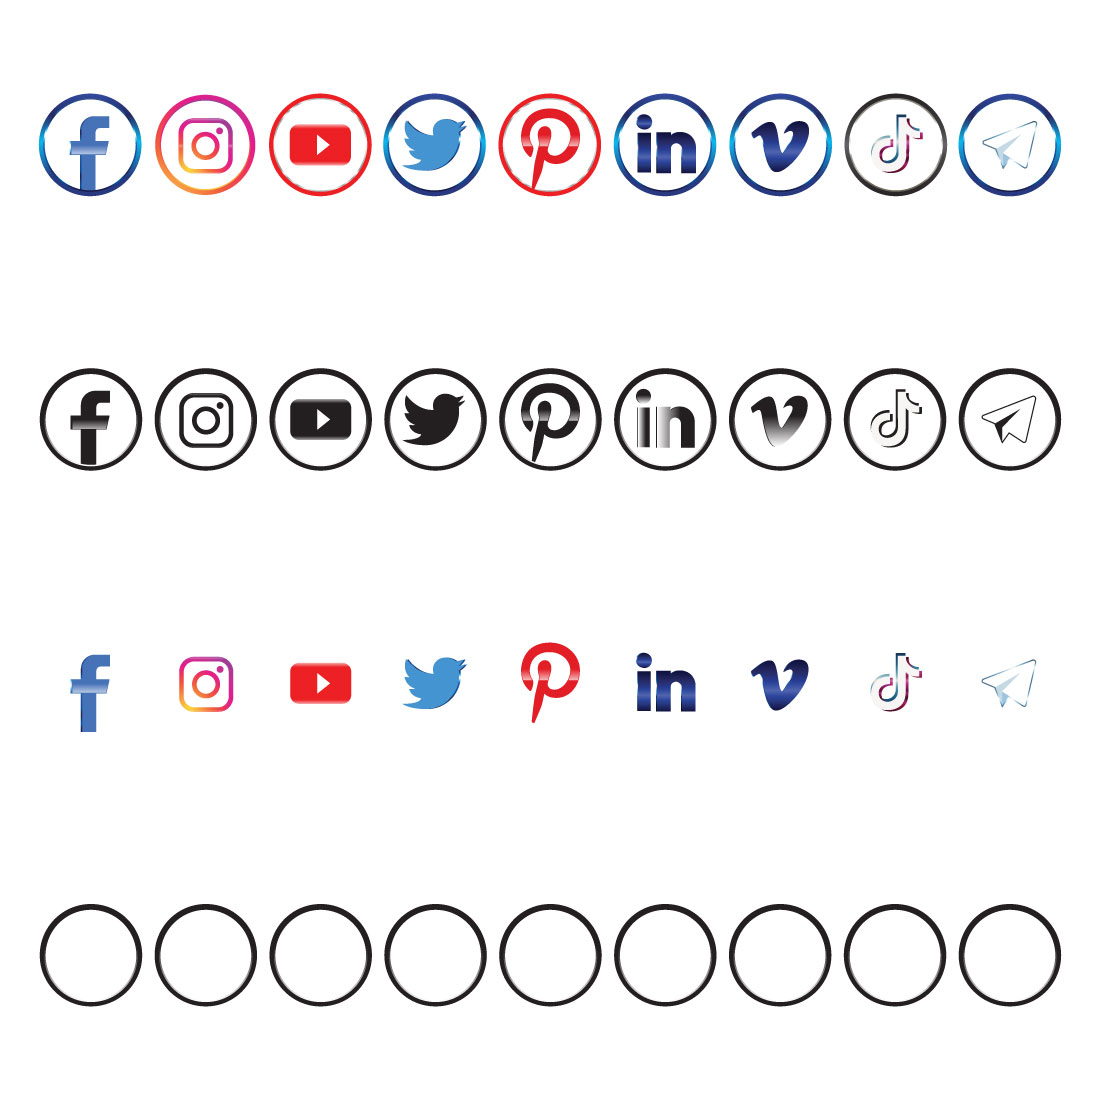 Some social media icons set.